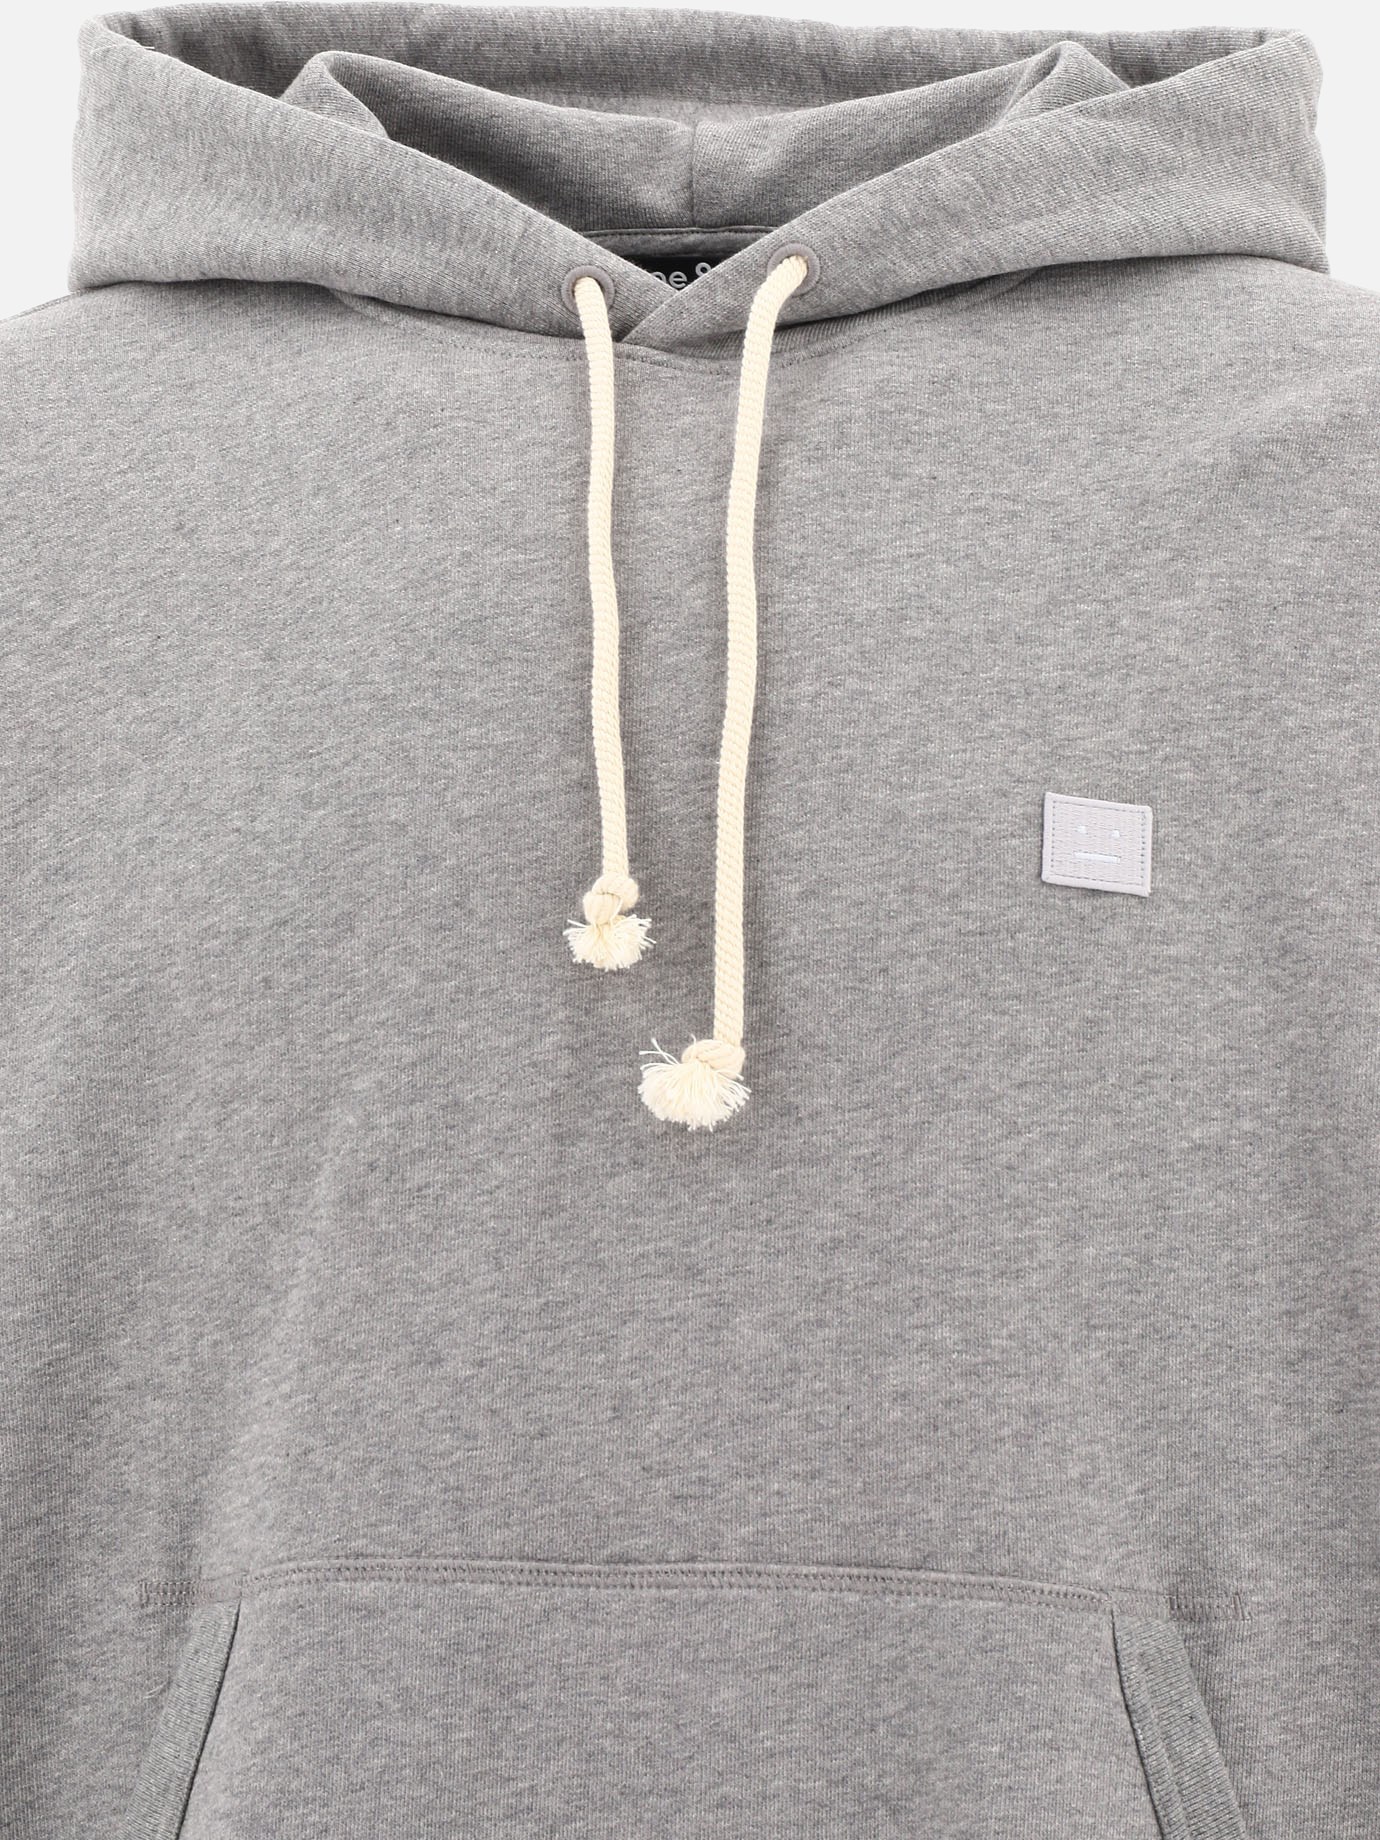  Nash Face  hoodie by Acne Studios